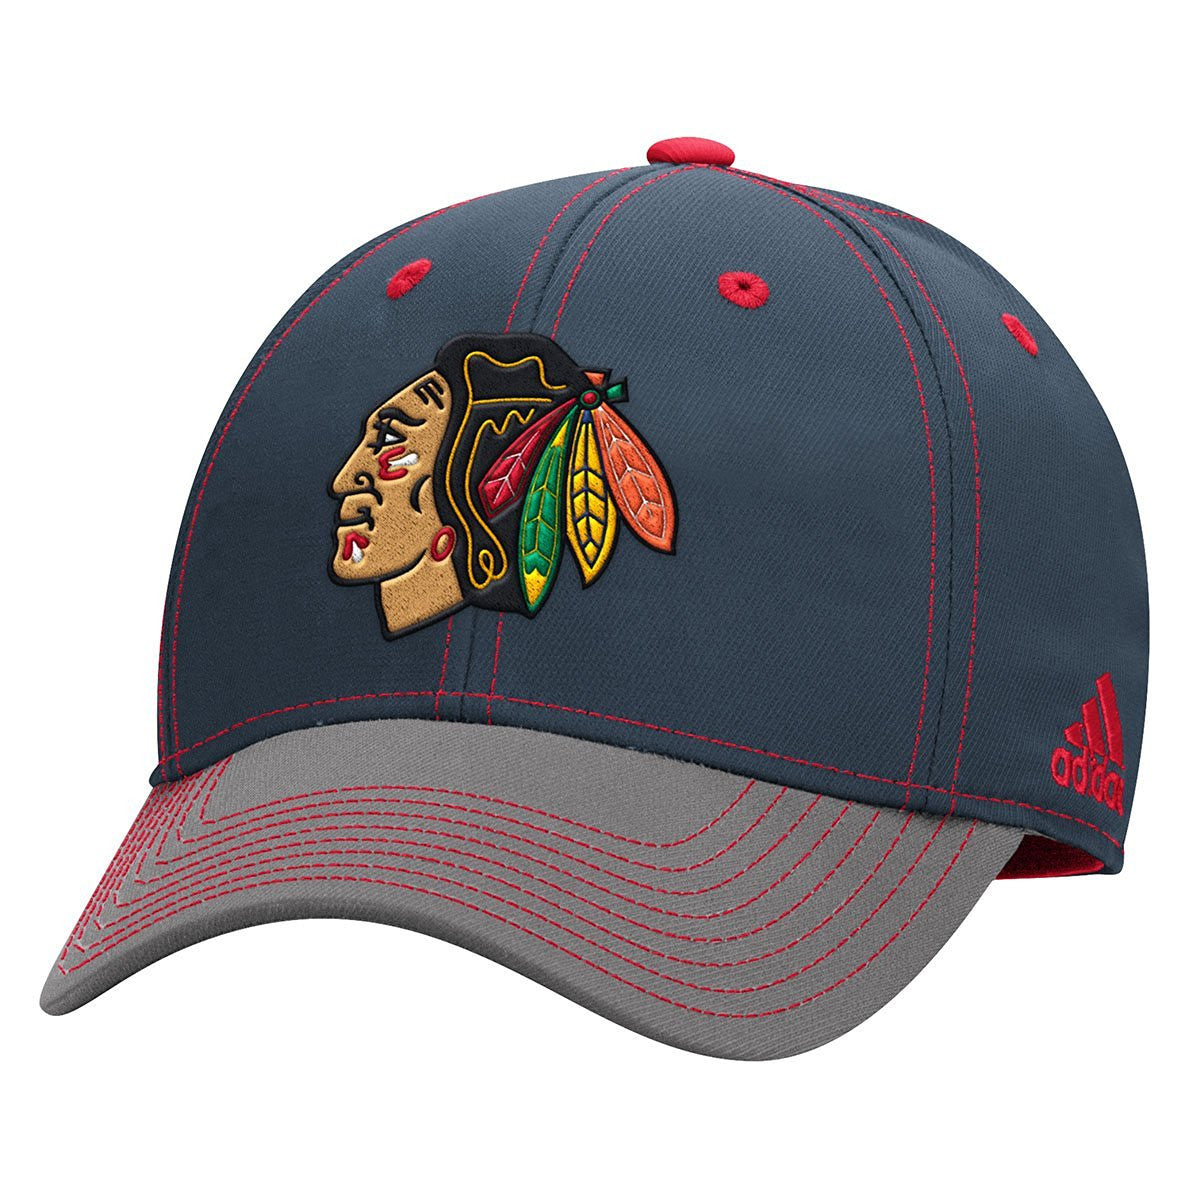 Chicago Blackhawks Adjustable Hat